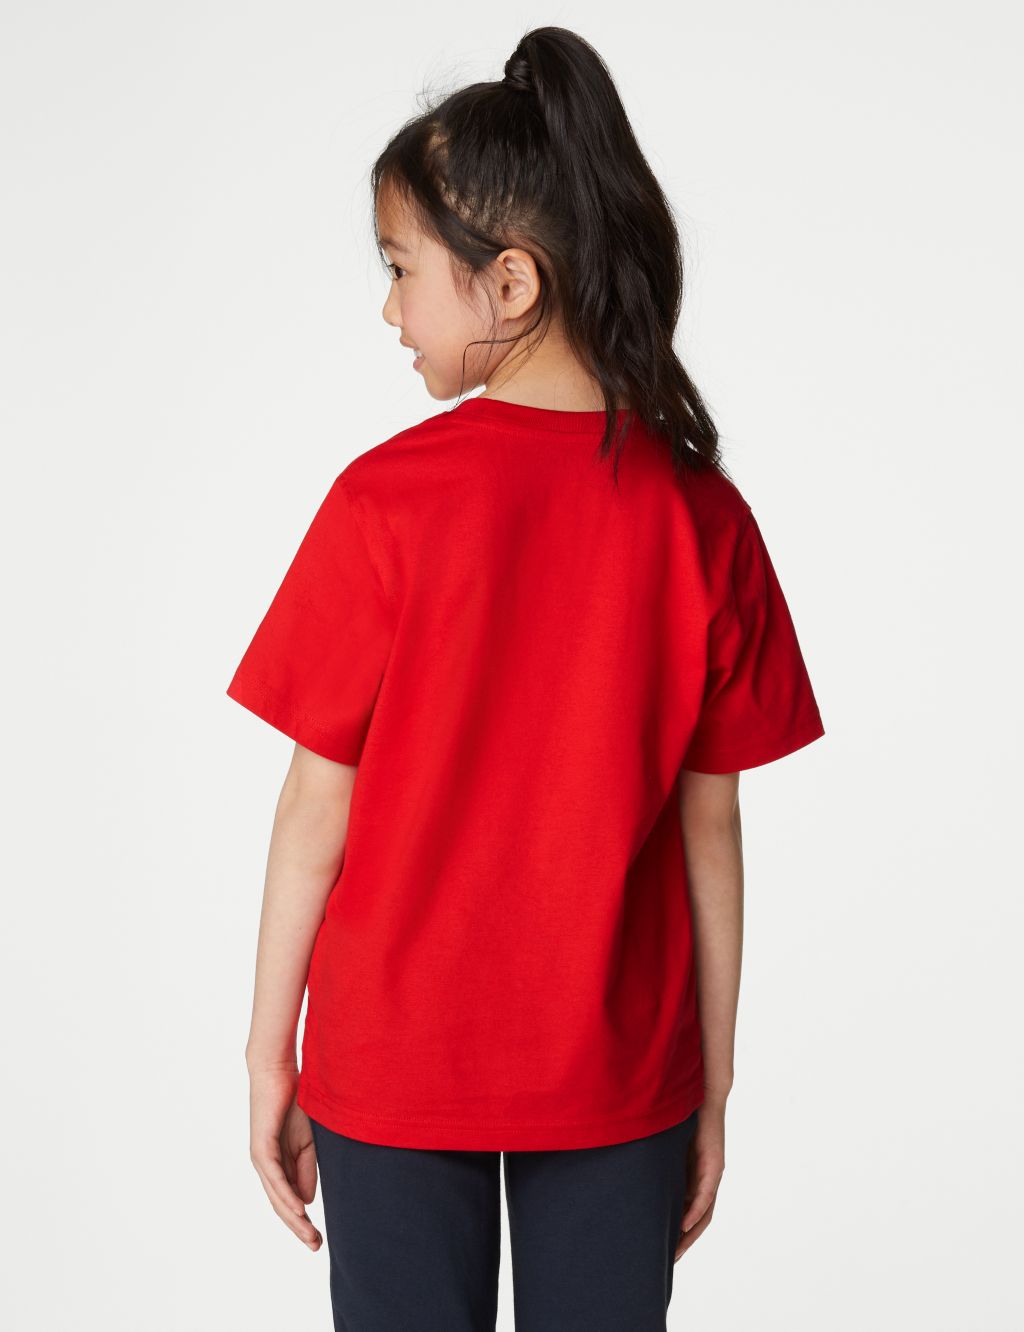 Unisex Pure Cotton School T-Shirt (2-16 Yrs) image 5